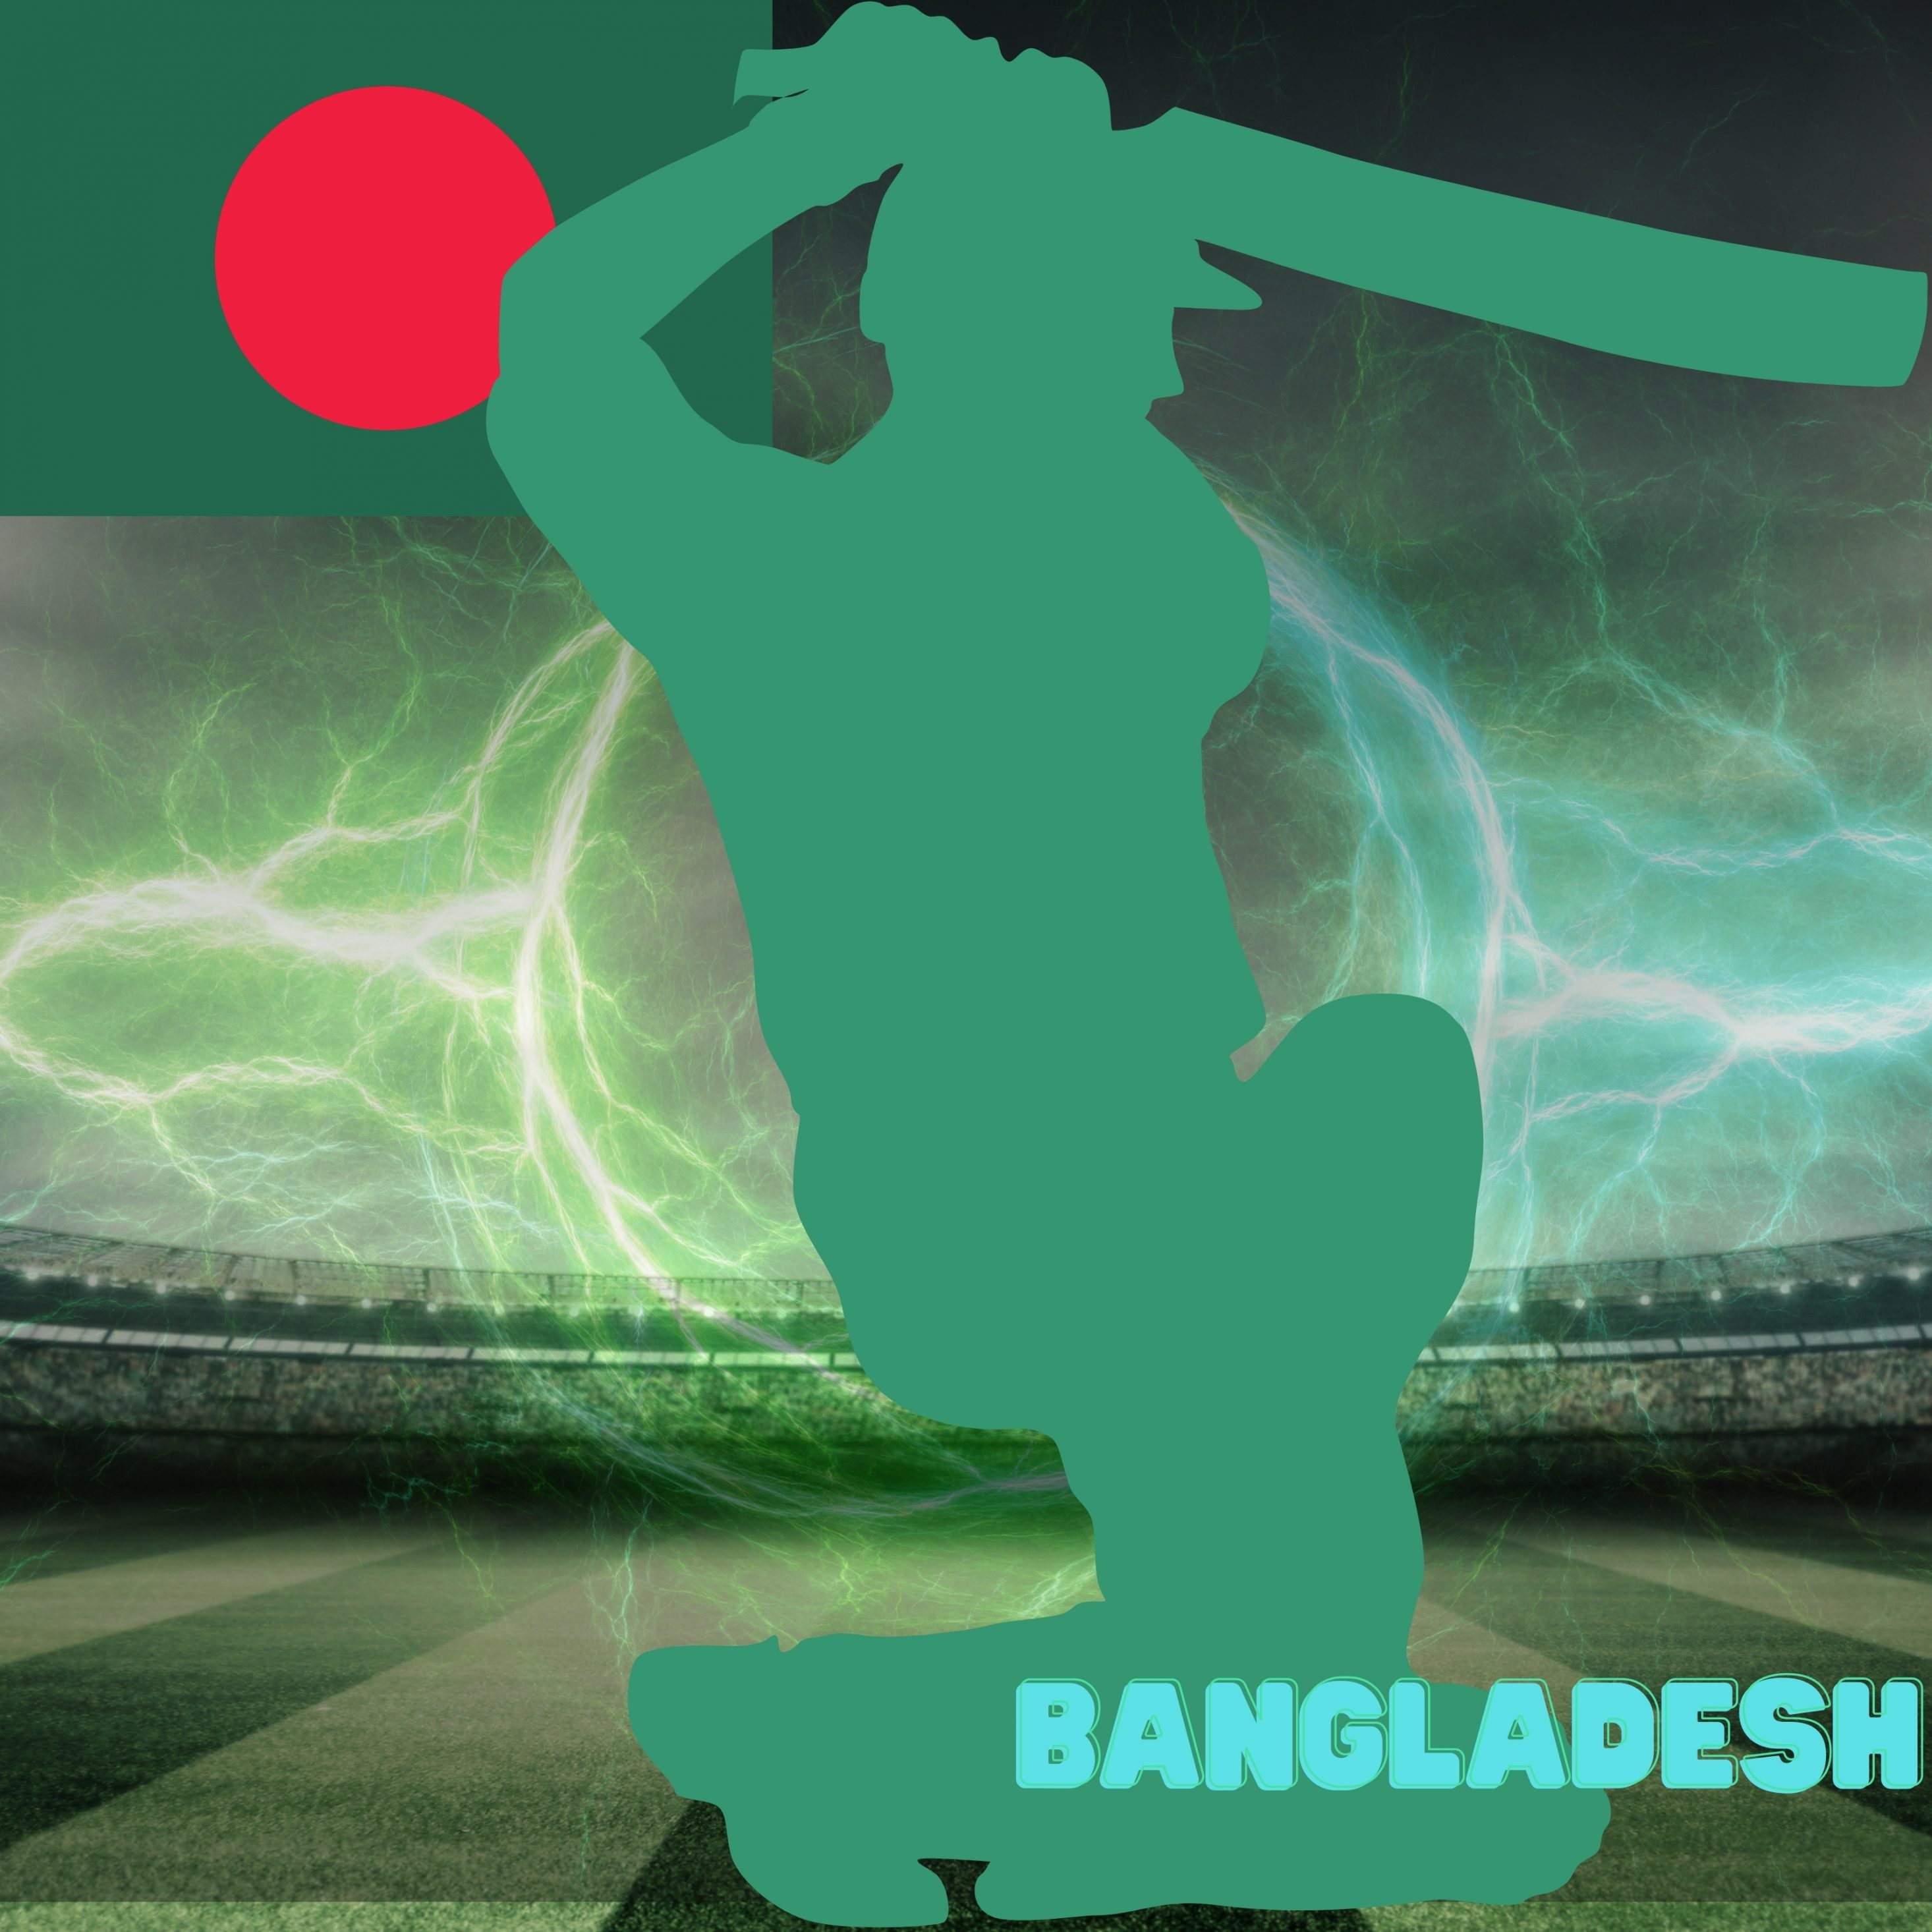 2932x2932 iPad Pro wallpaper 4k Bangladesh Cricket Stadium iPad Wallpaper 2932x2932 pixels resolution